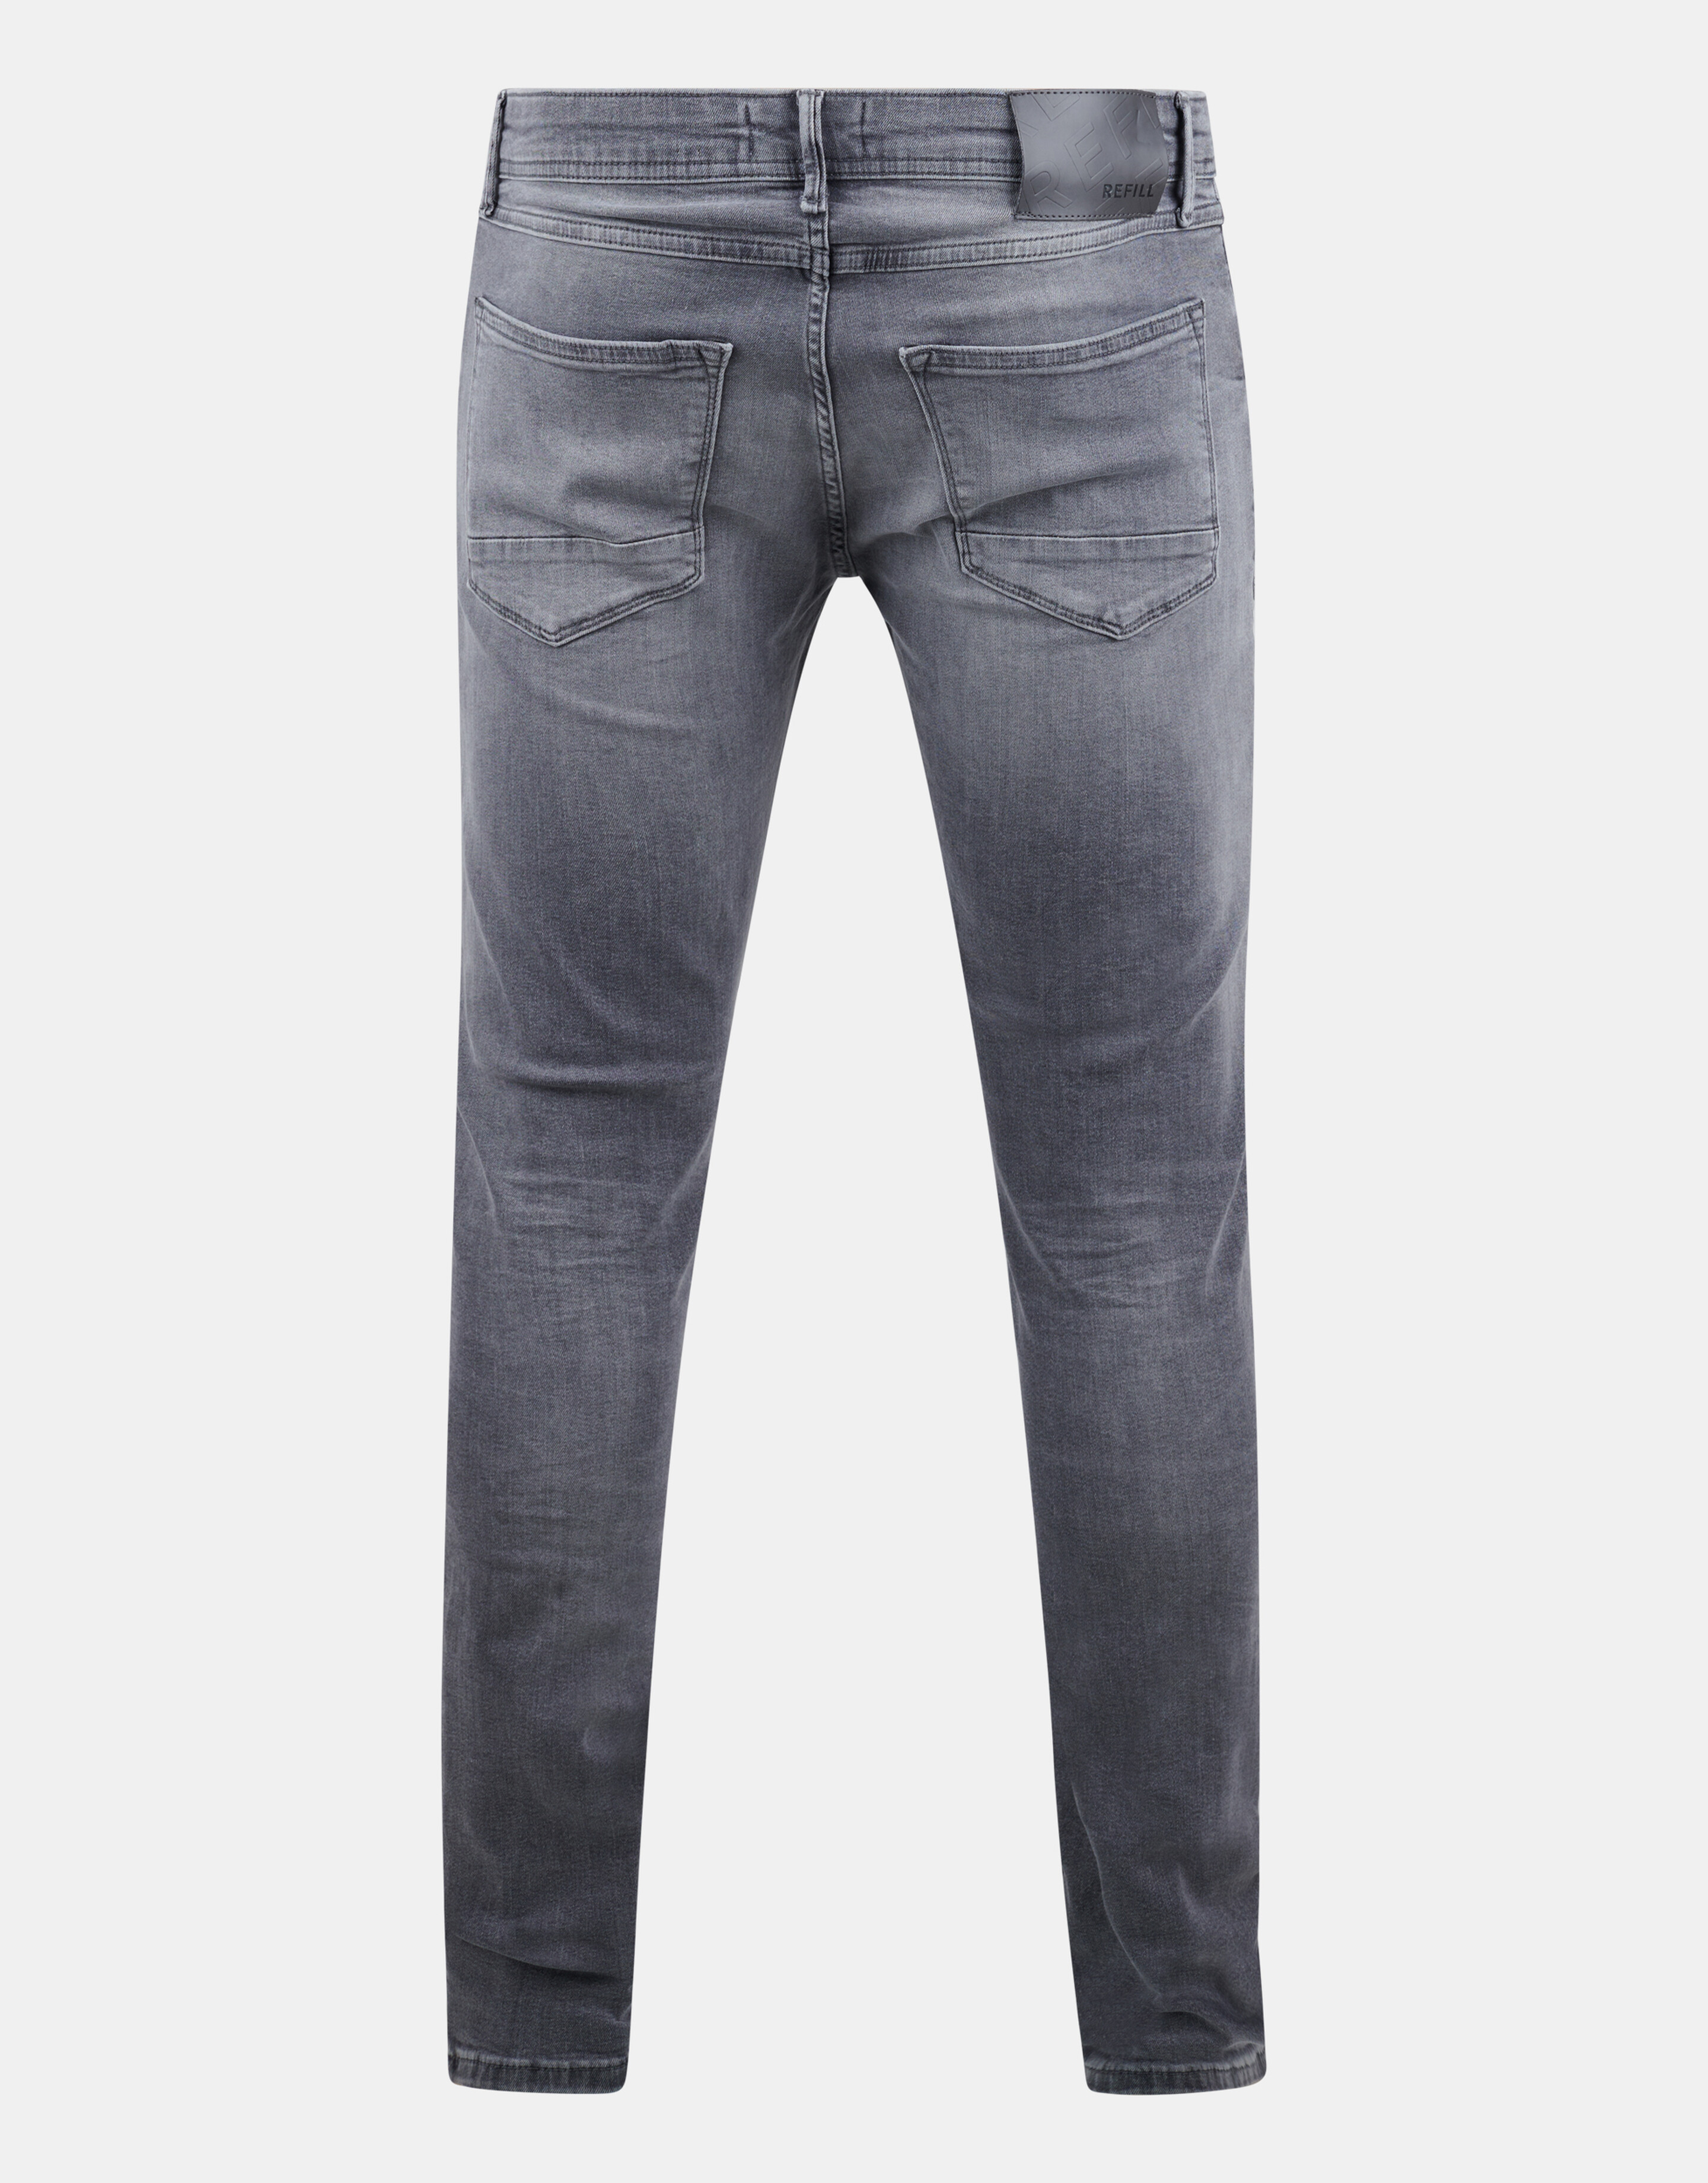 Leroy Skinny Jack Jeans L32 Refill